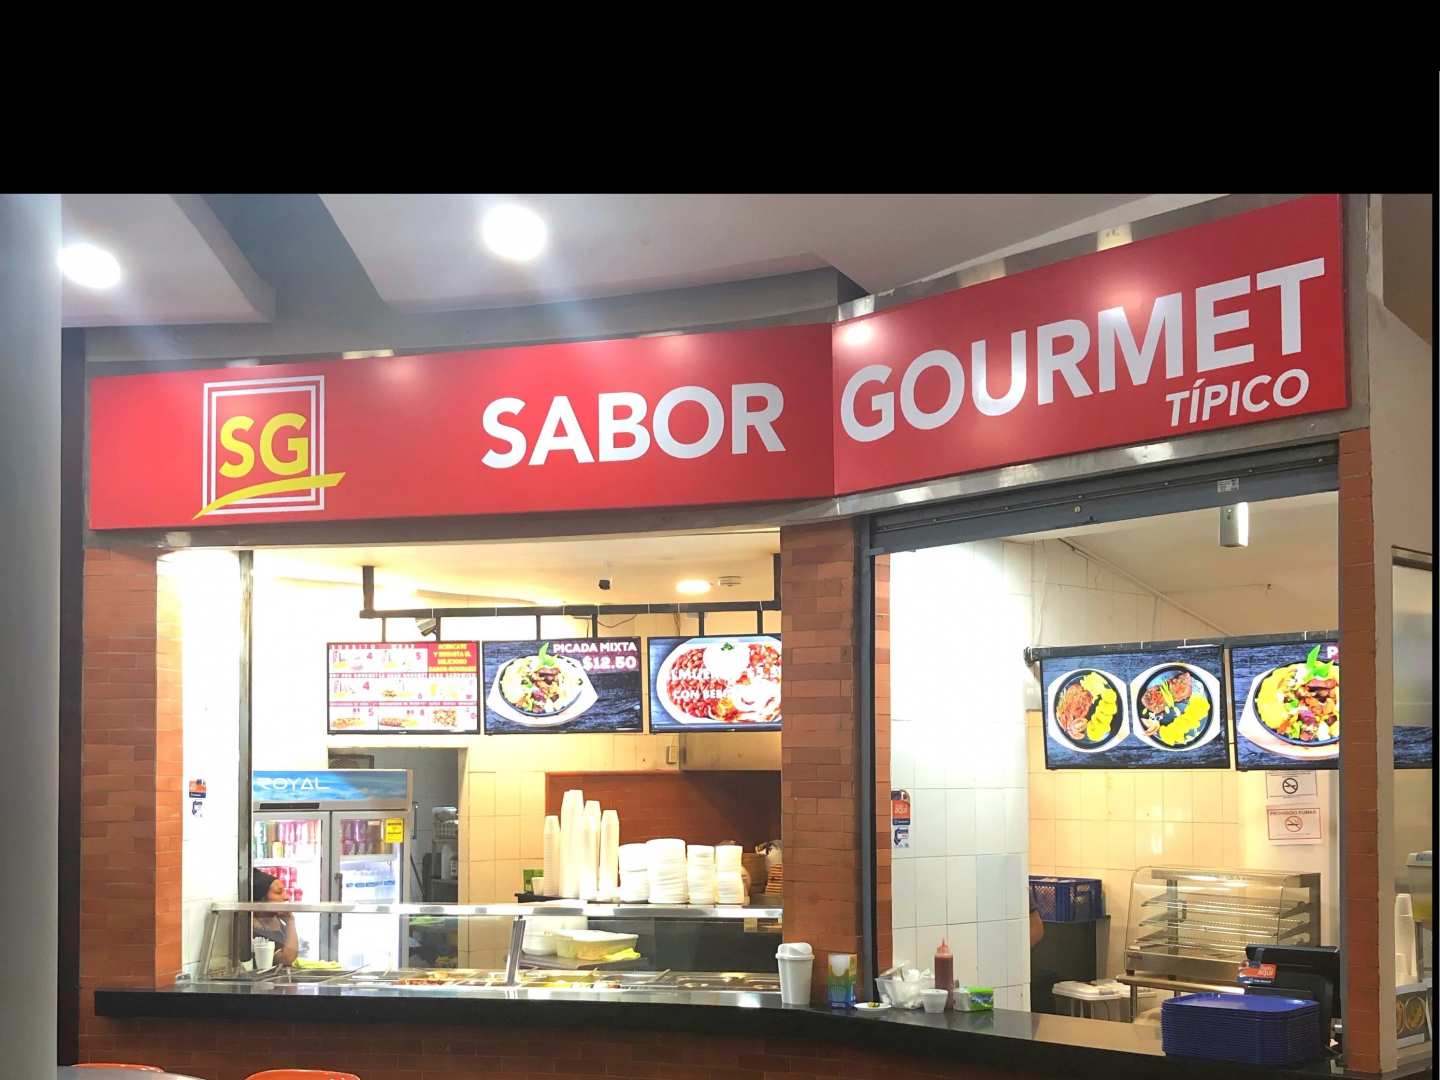 Sabor Gourmet Típico